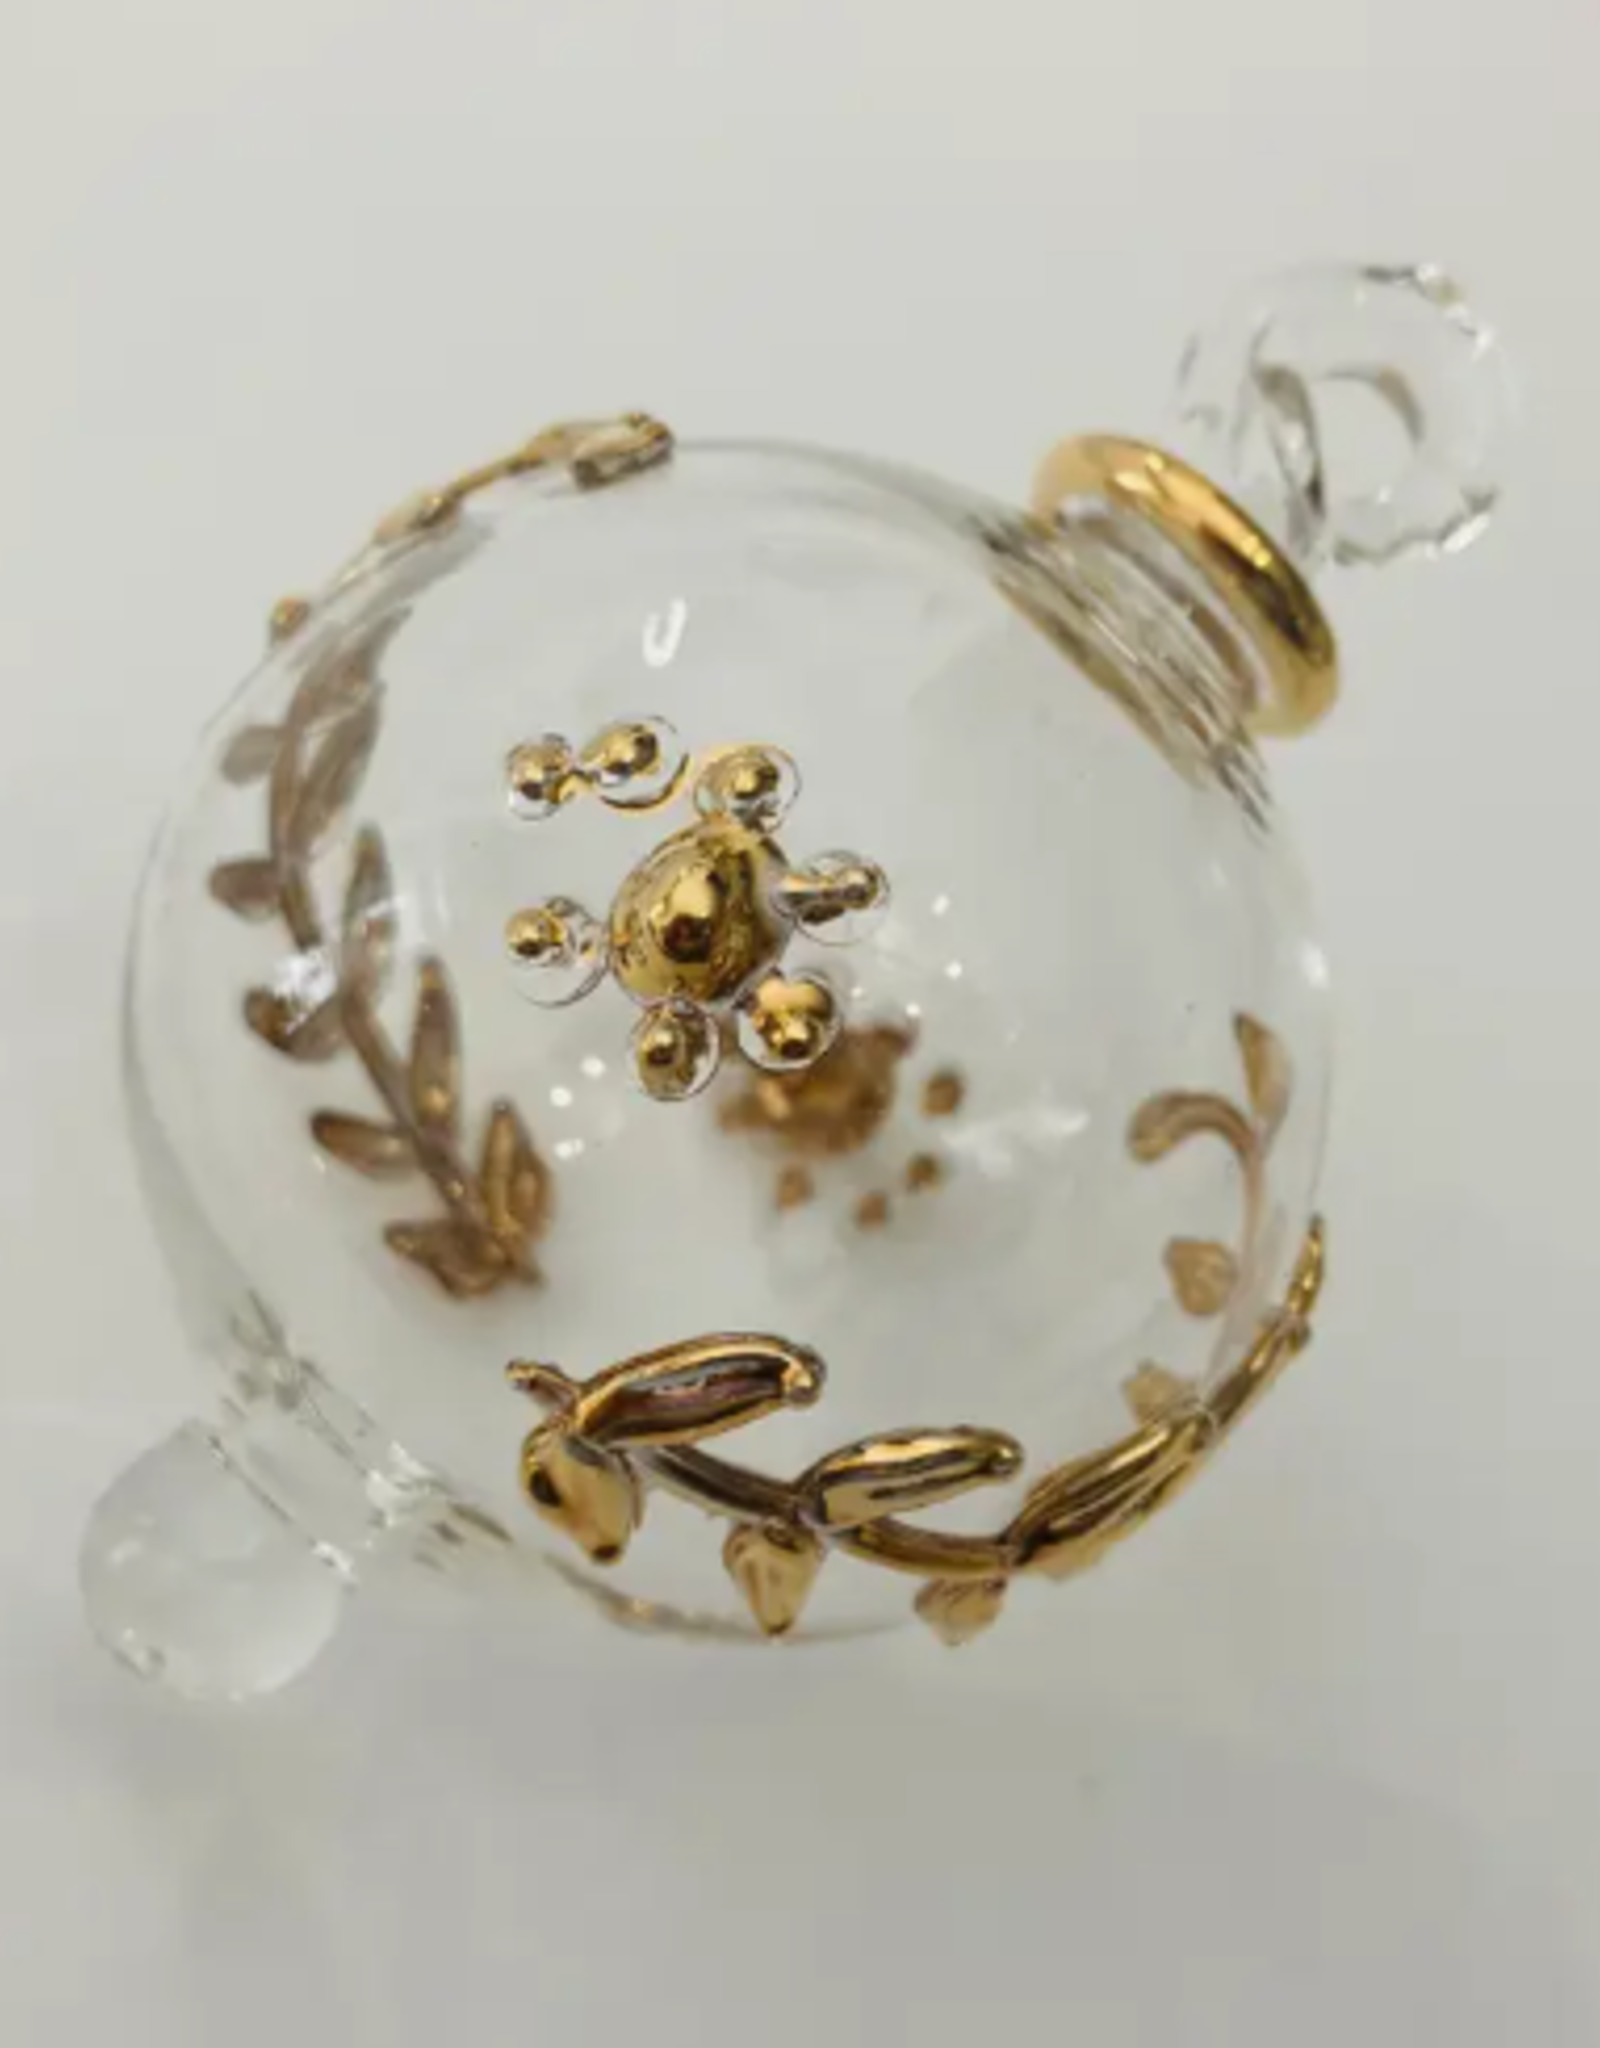 Dandarah Small Blown Glass Ornament - Gold Flower Leaves